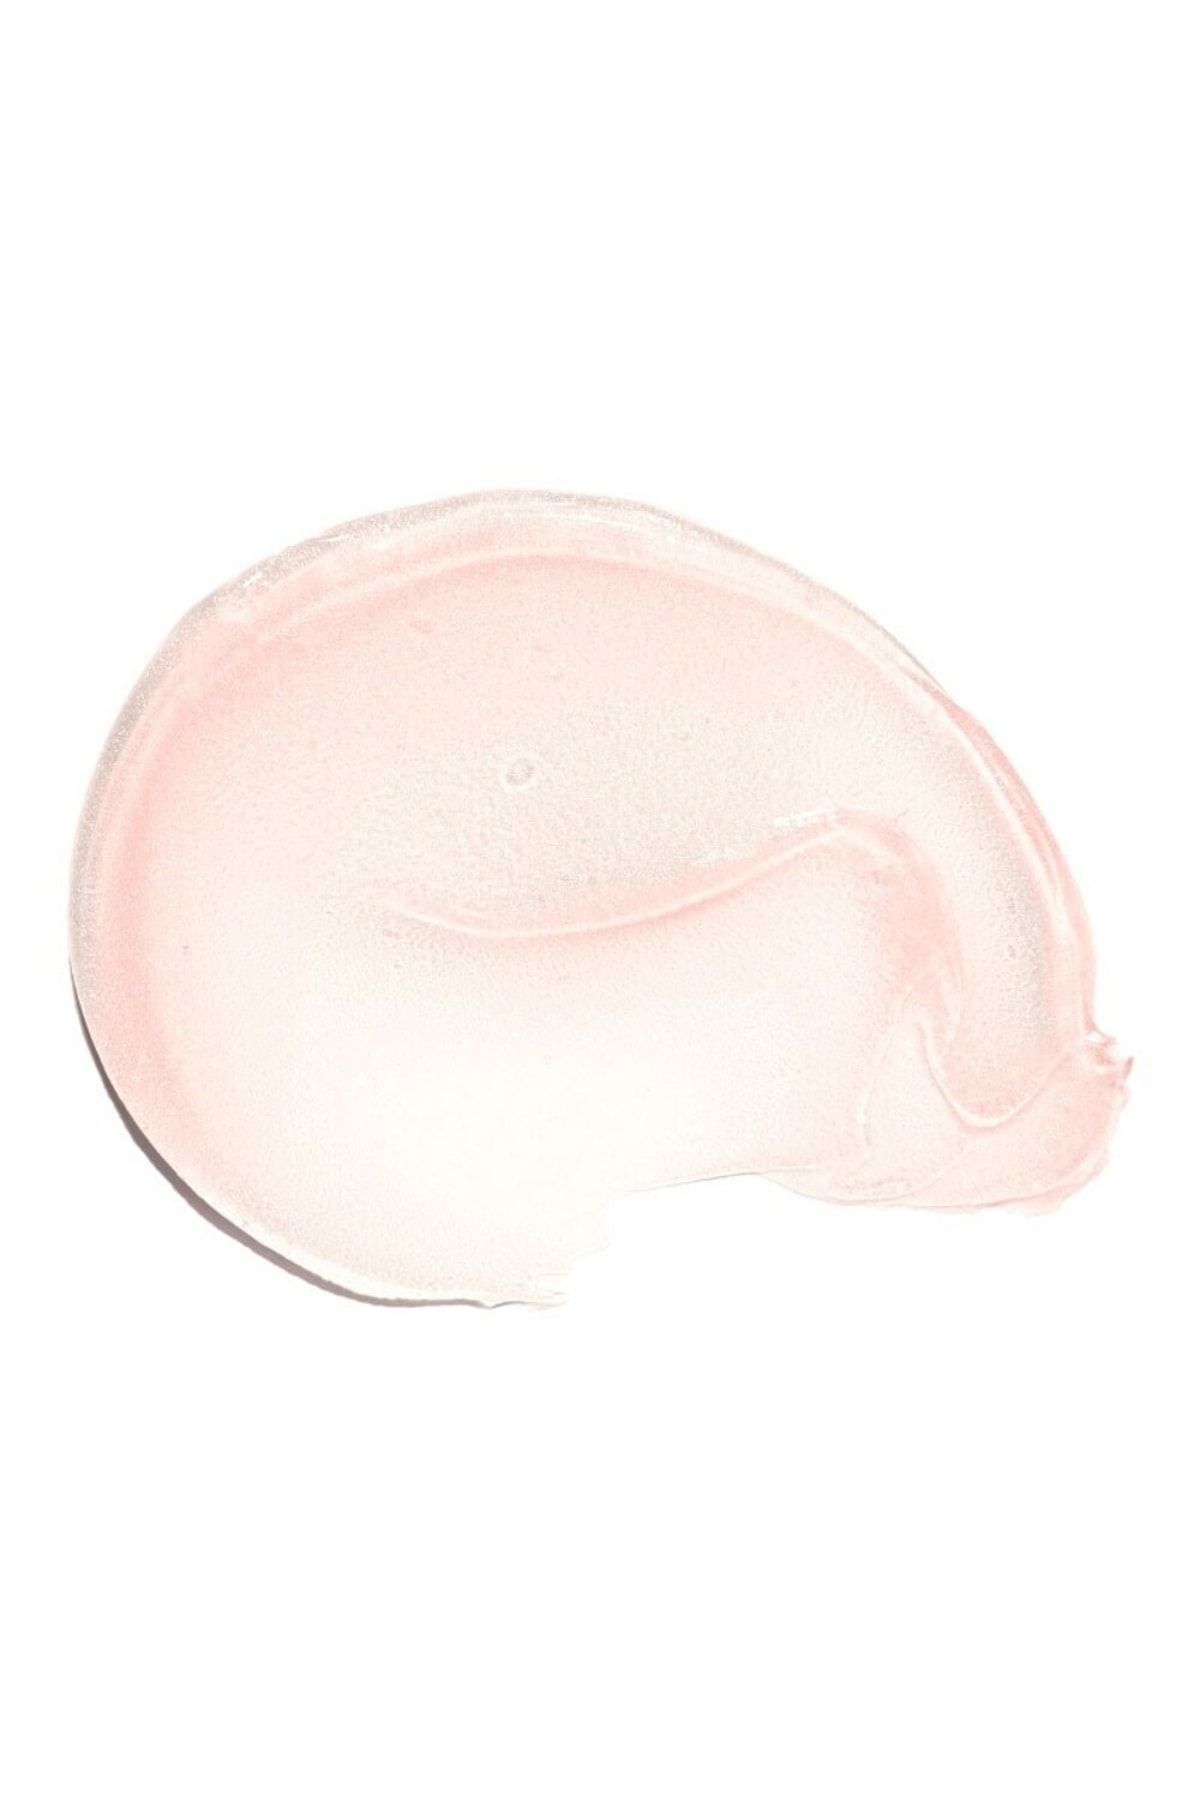 Physicians Formula Diamond Plumper Lipgloss Light Pink Princess Cut